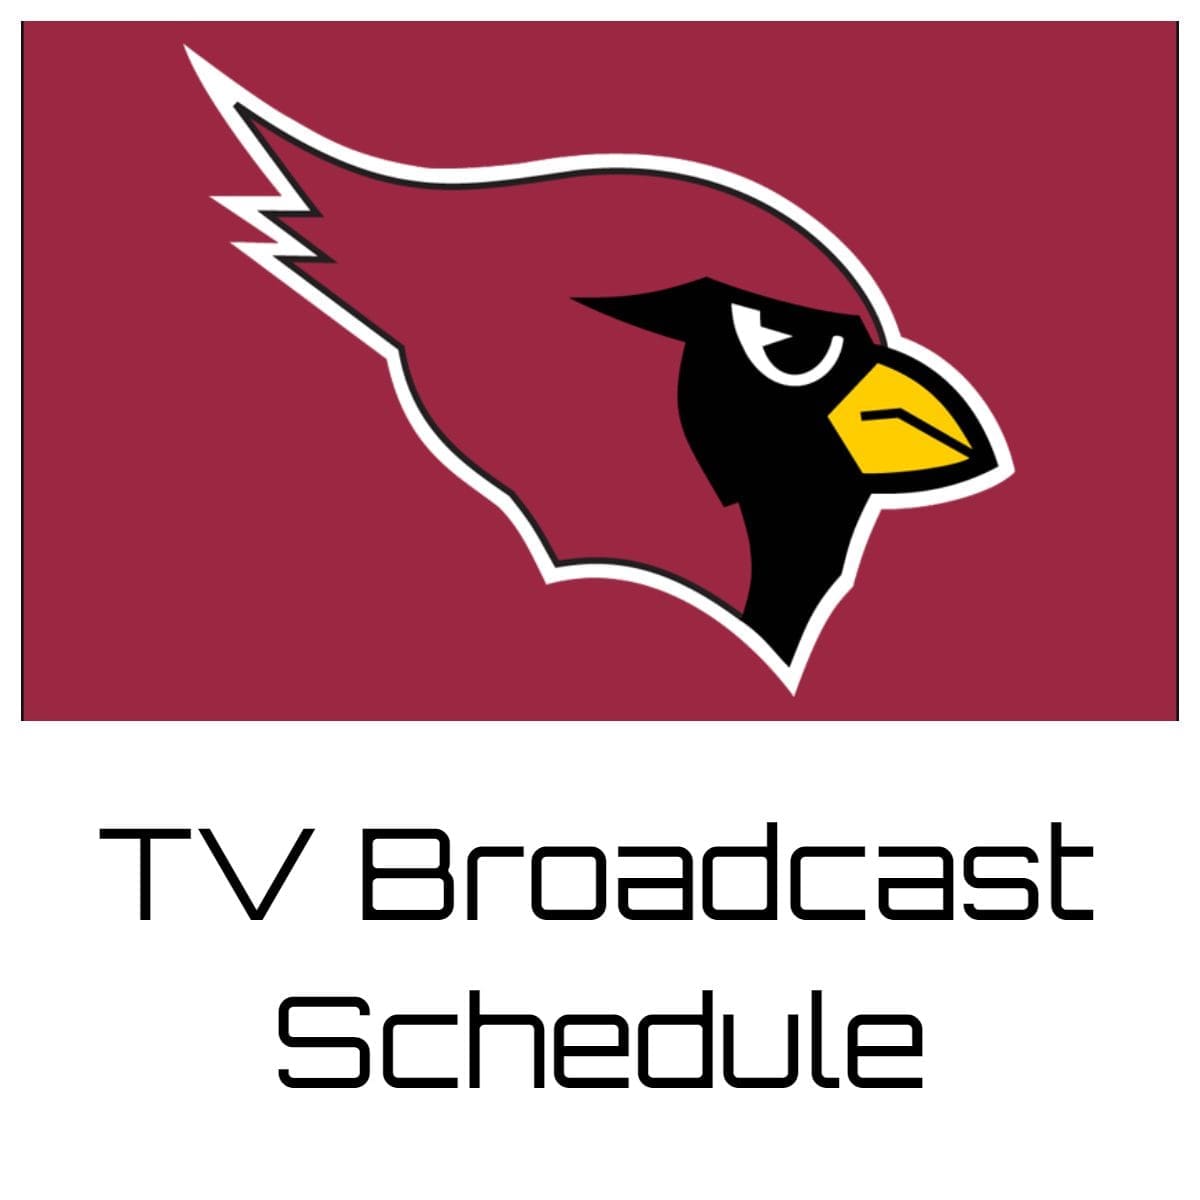 Arizona Cardinals TV Broadcast Schedule